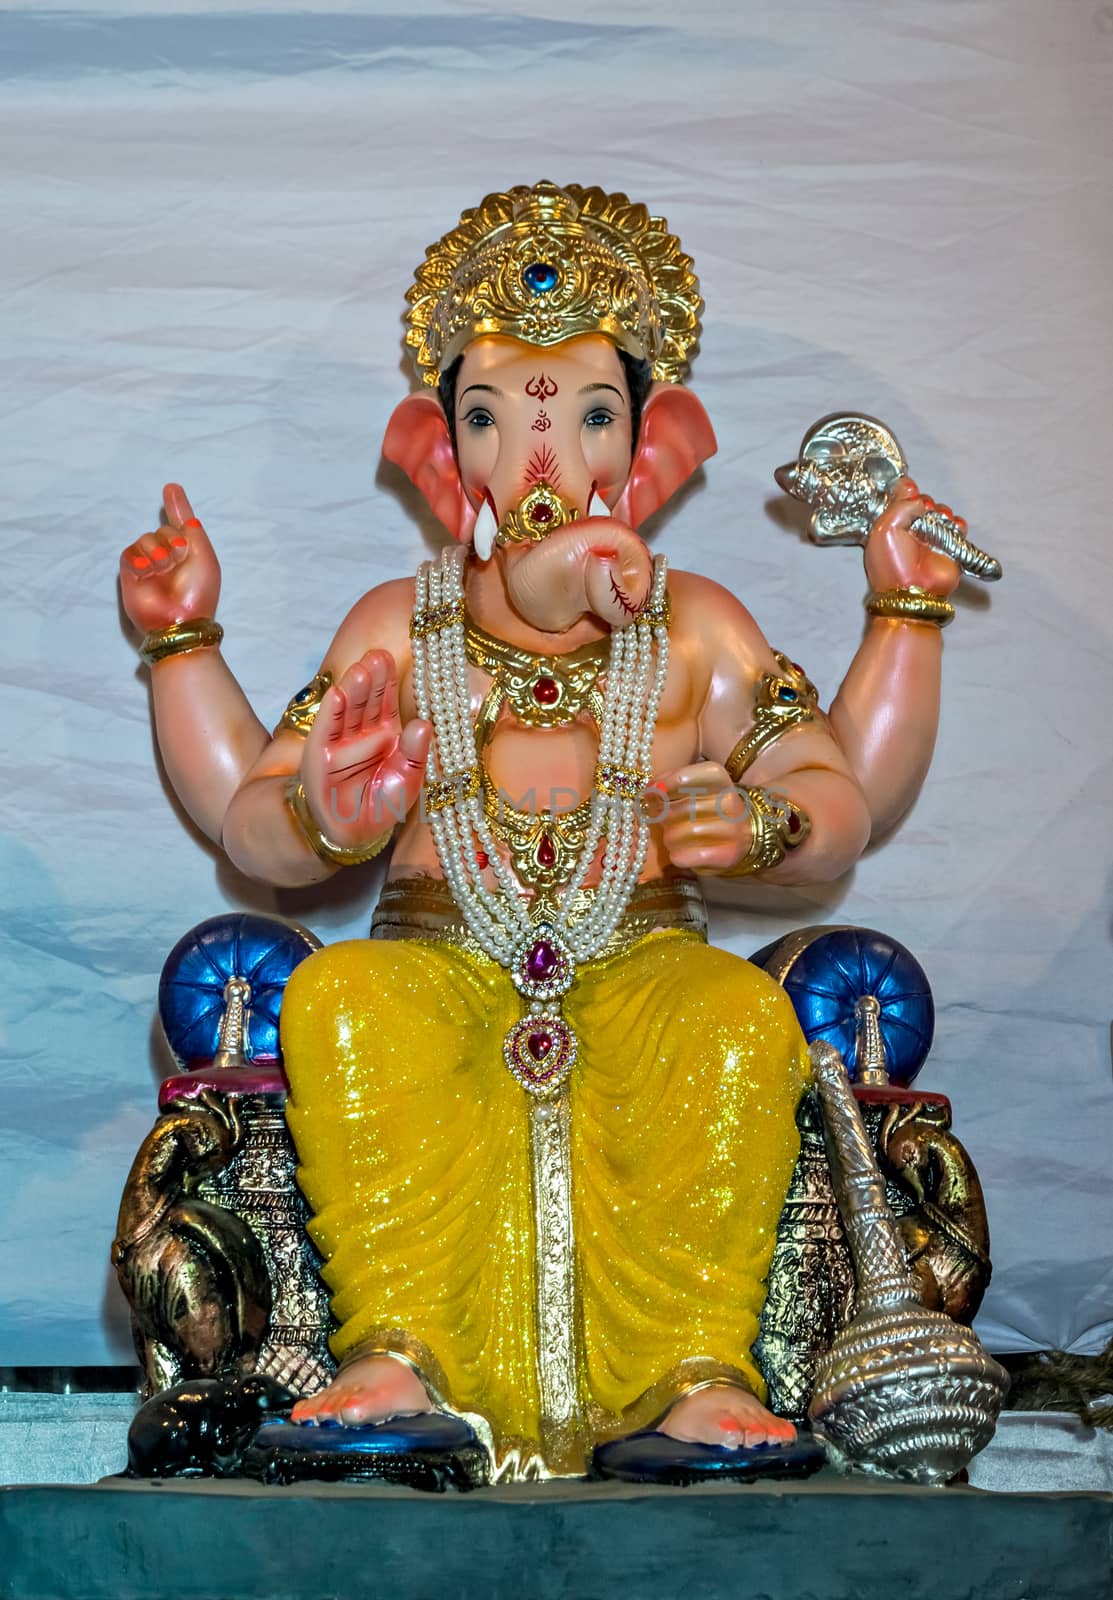 Freshly made, painted, hand crafted clay idol of Hindu god Lord Ganesha. by lalam